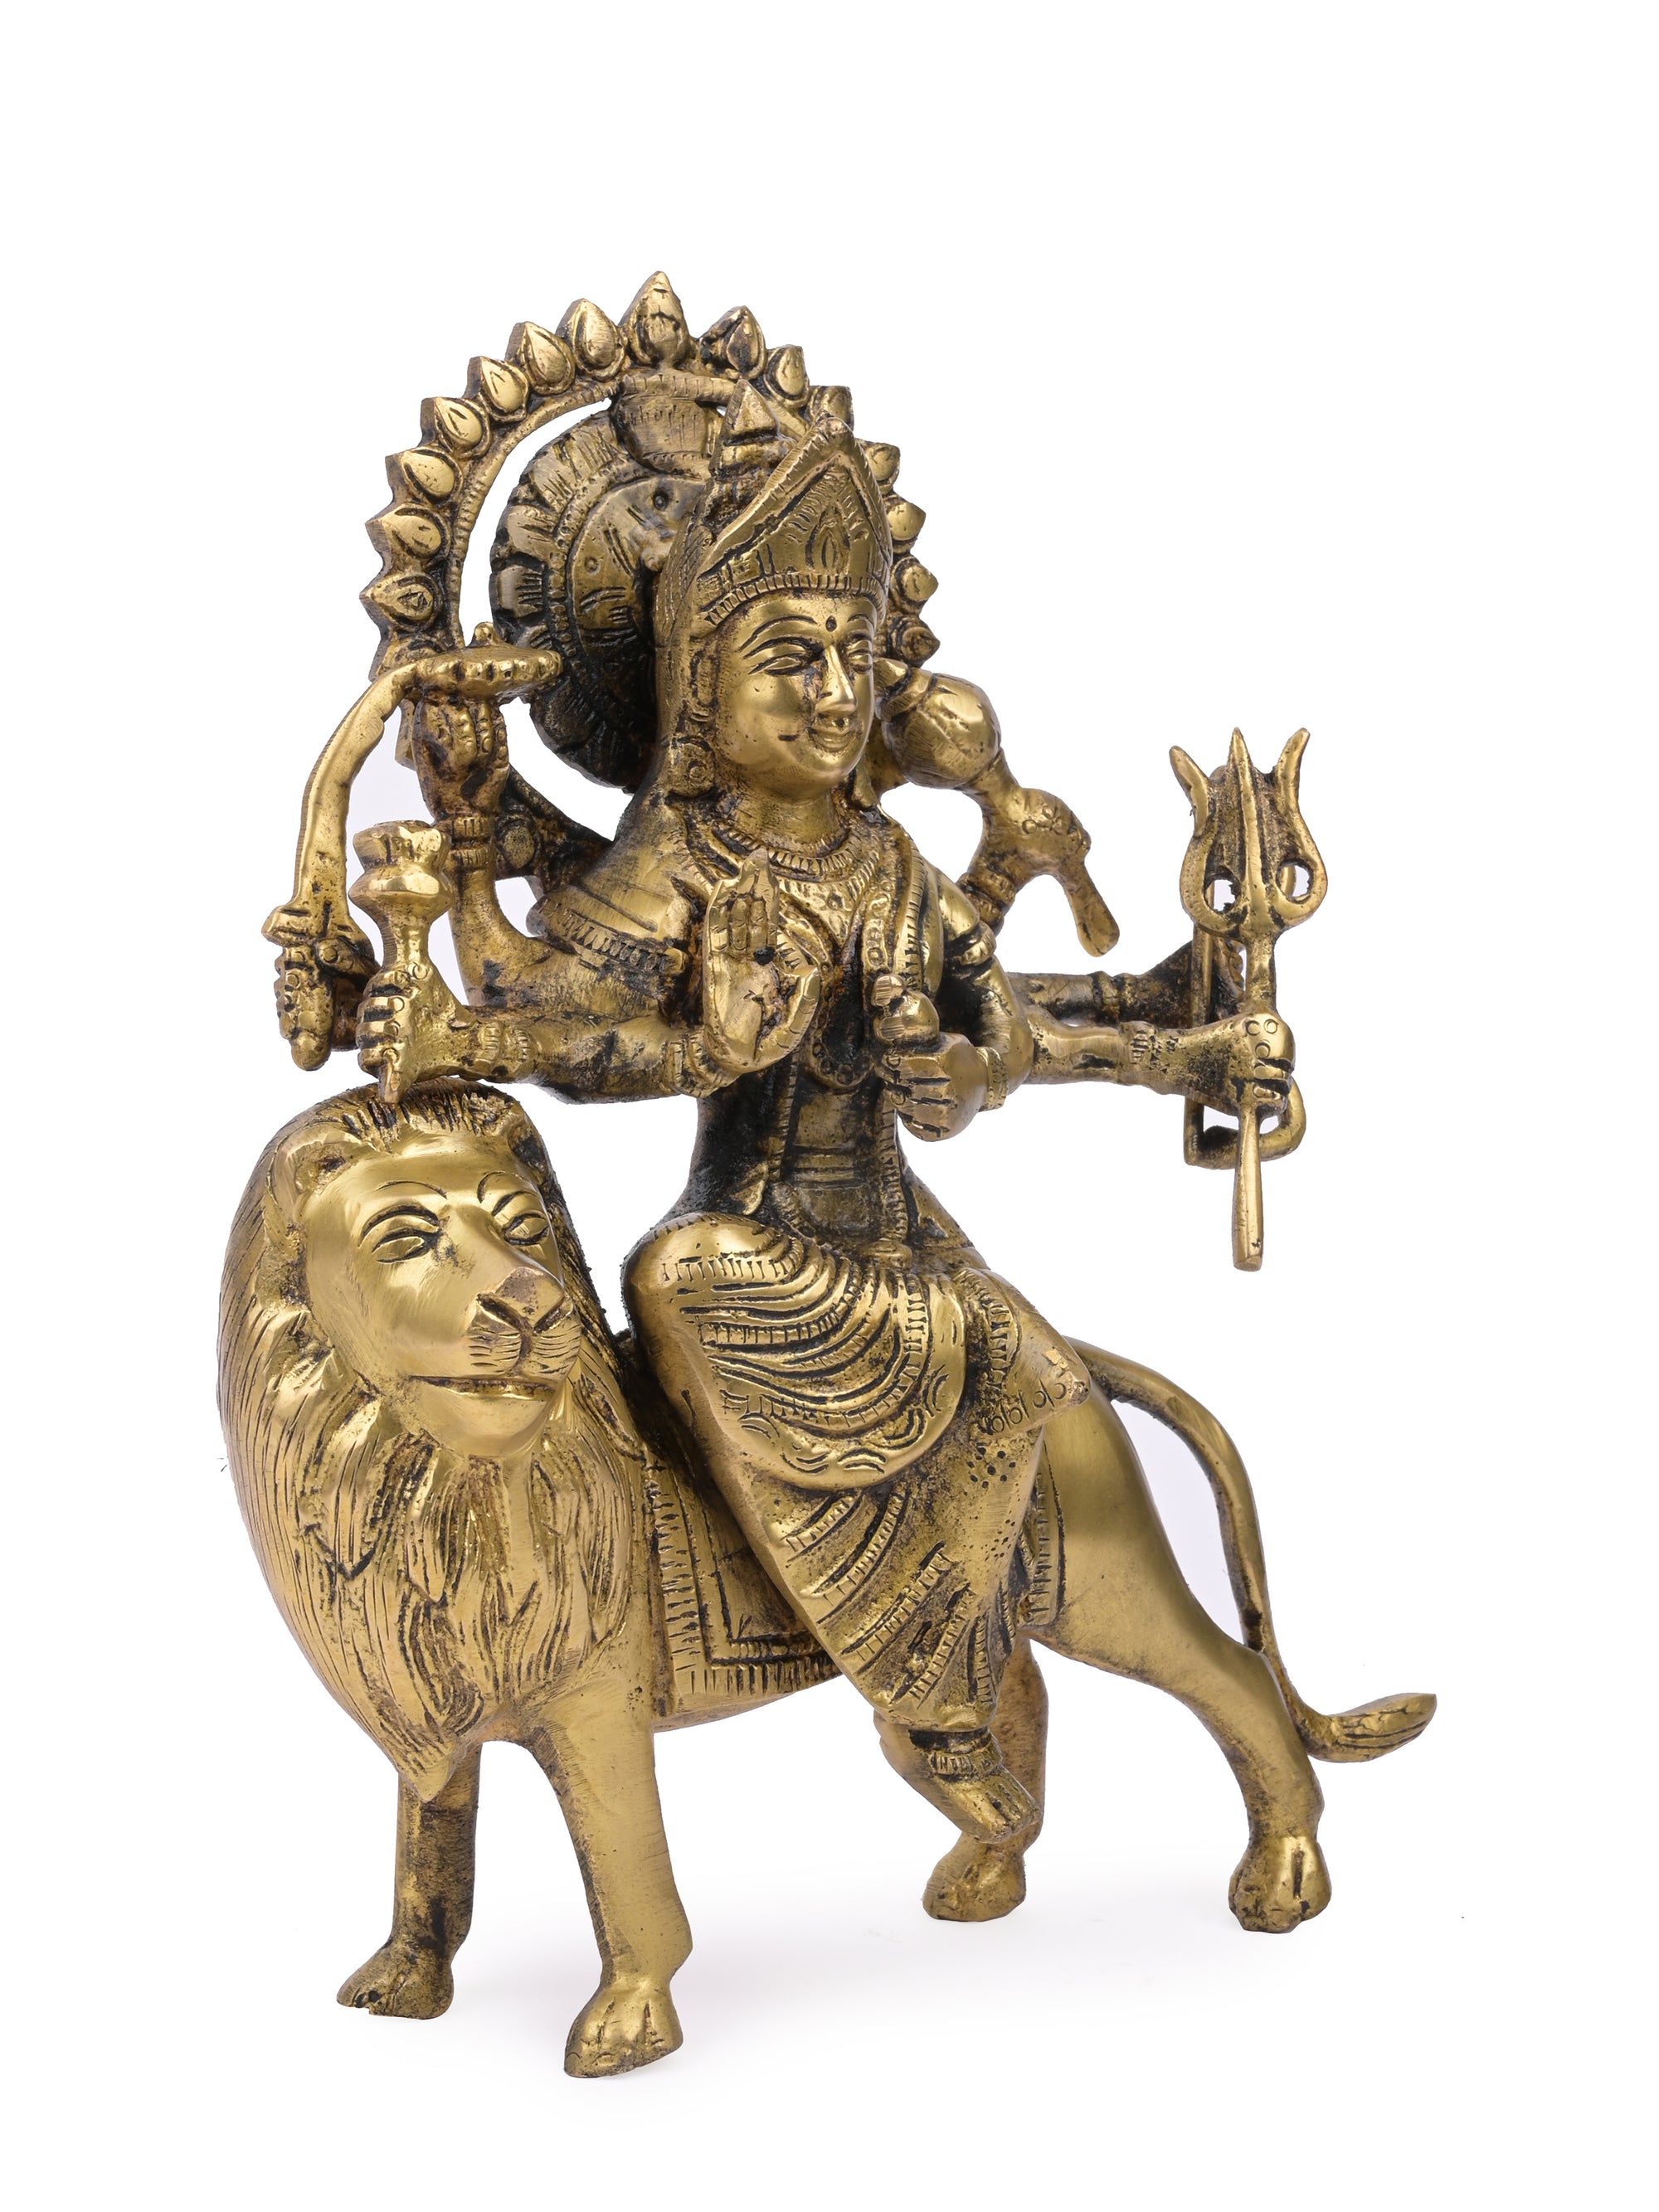 Brass idol of Goddess Durga / Sherawali Mata riding on a Lion - The Heritage Artifacts